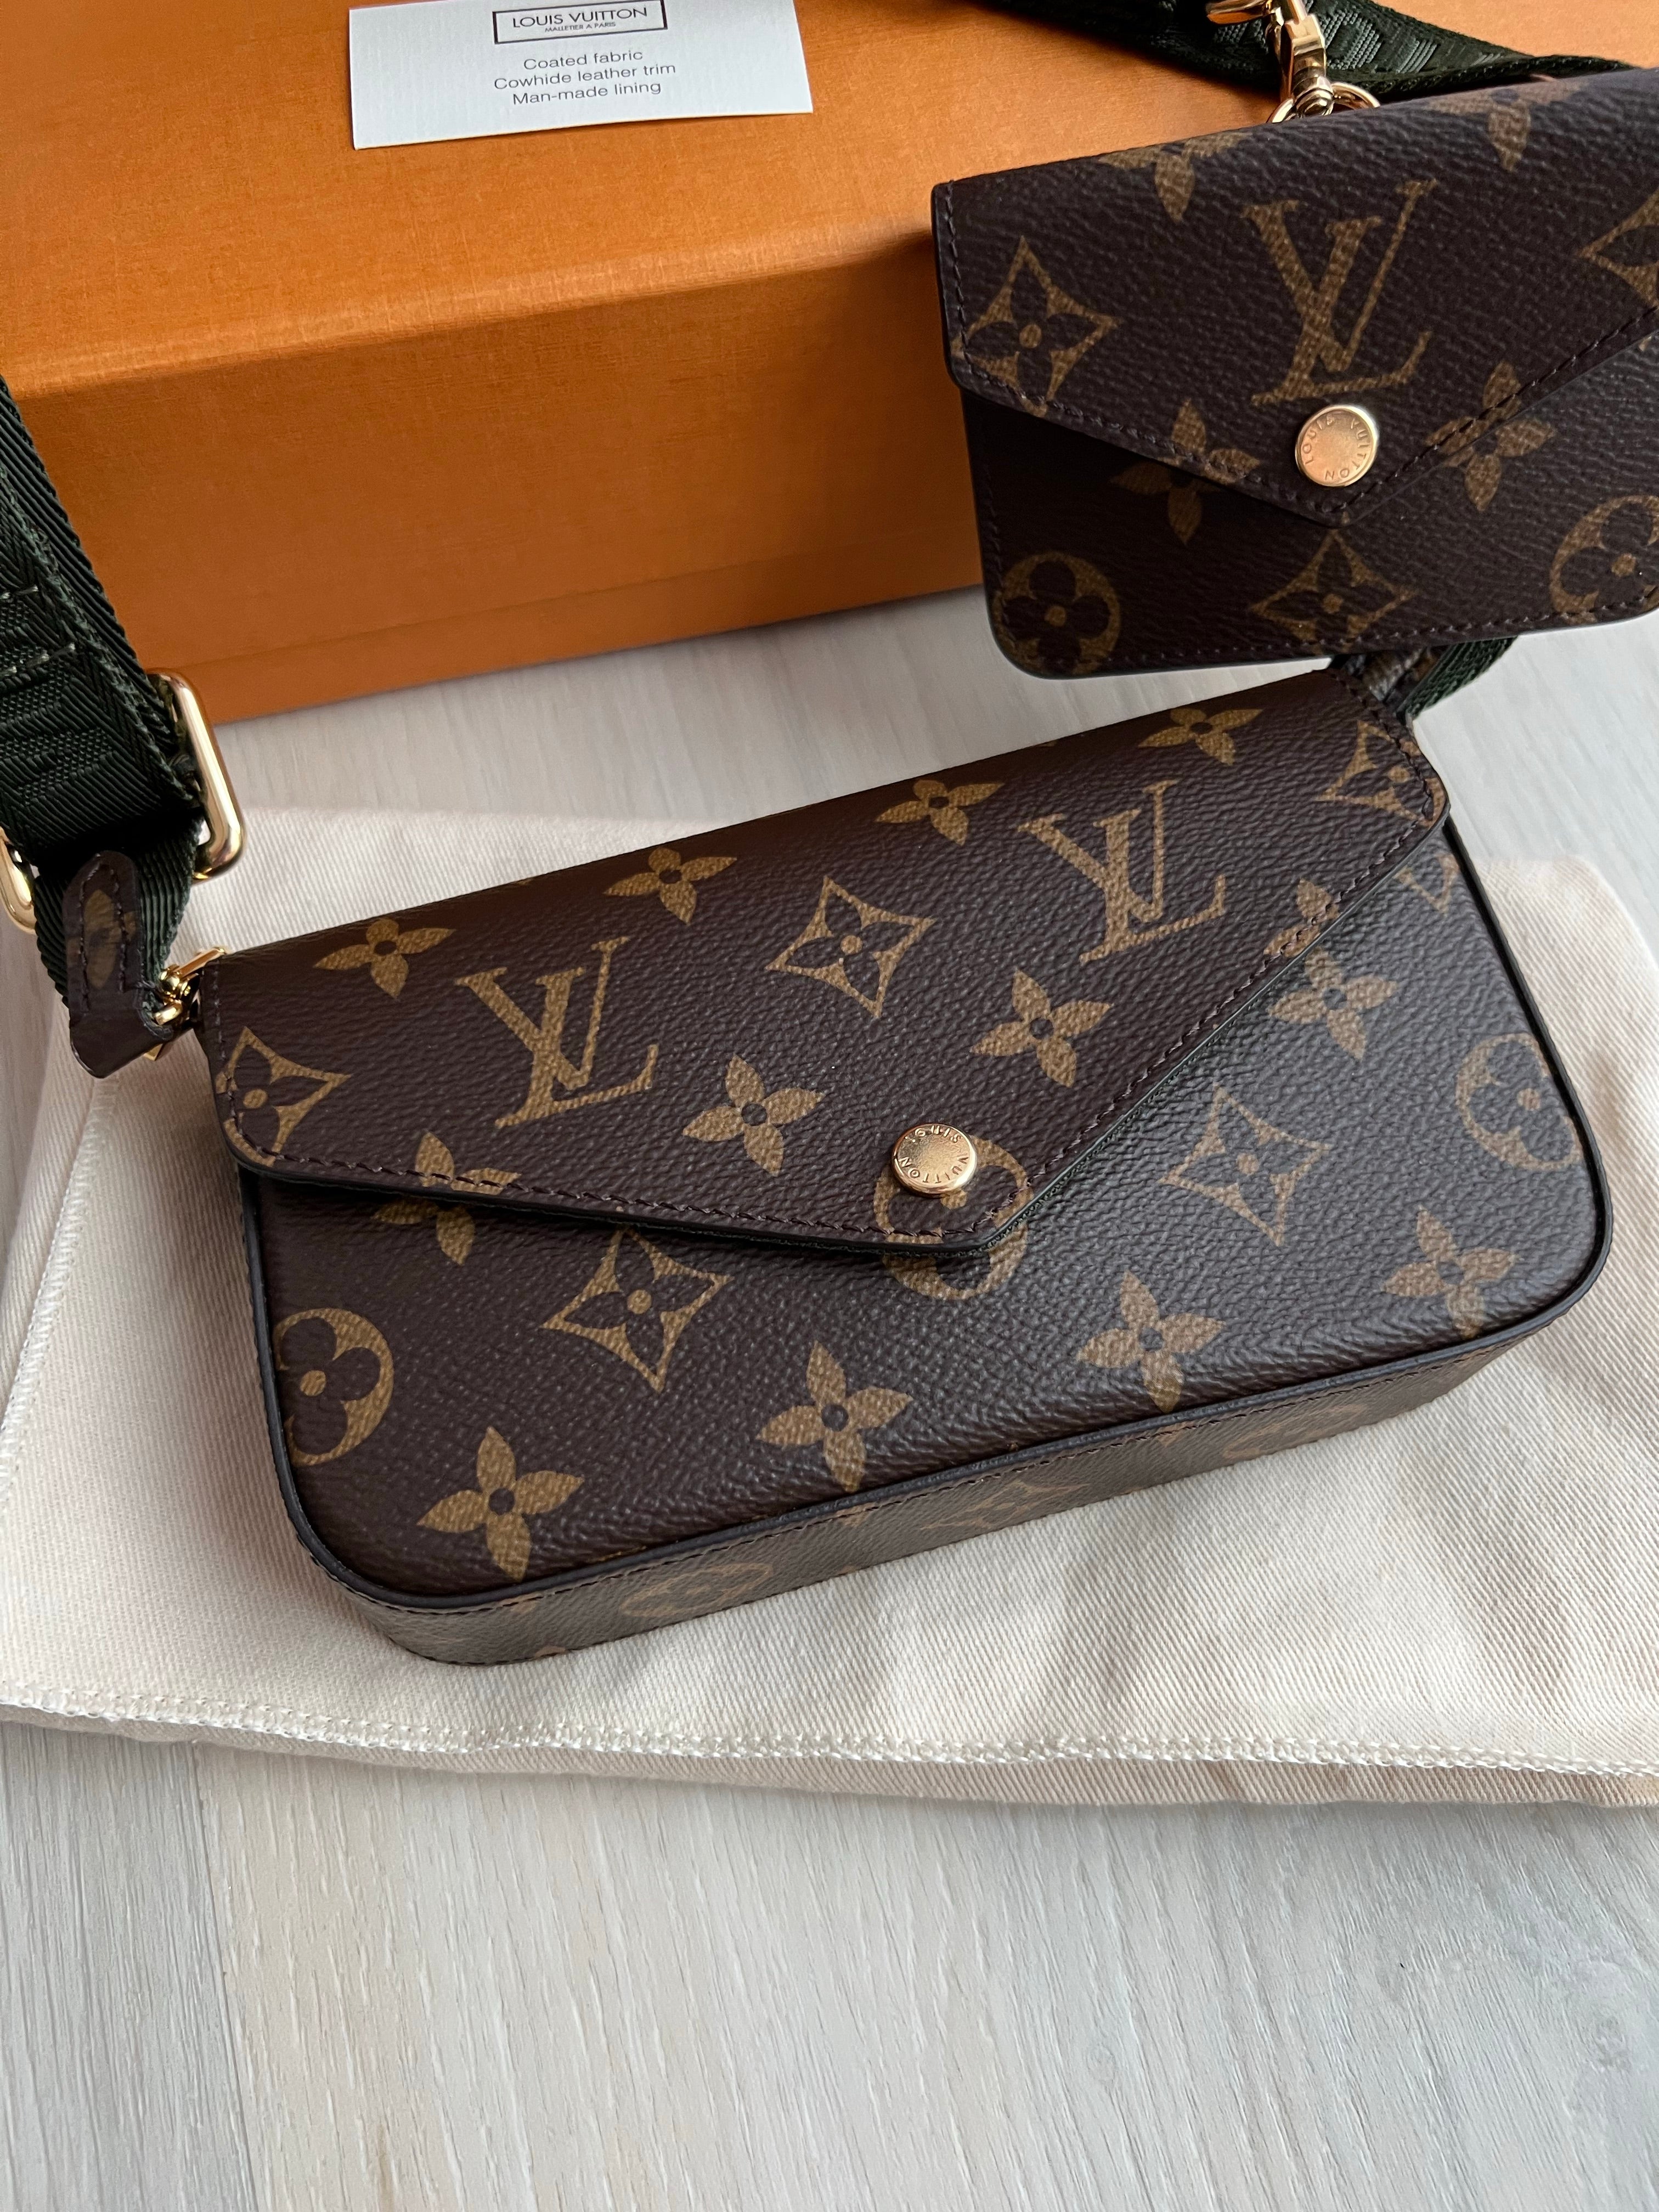 Louis vuitton Felicie bag with Bandouliere Strap RRP $3900 - Felicie Bag  with Bandouliere Strap on Designer Wardrobe